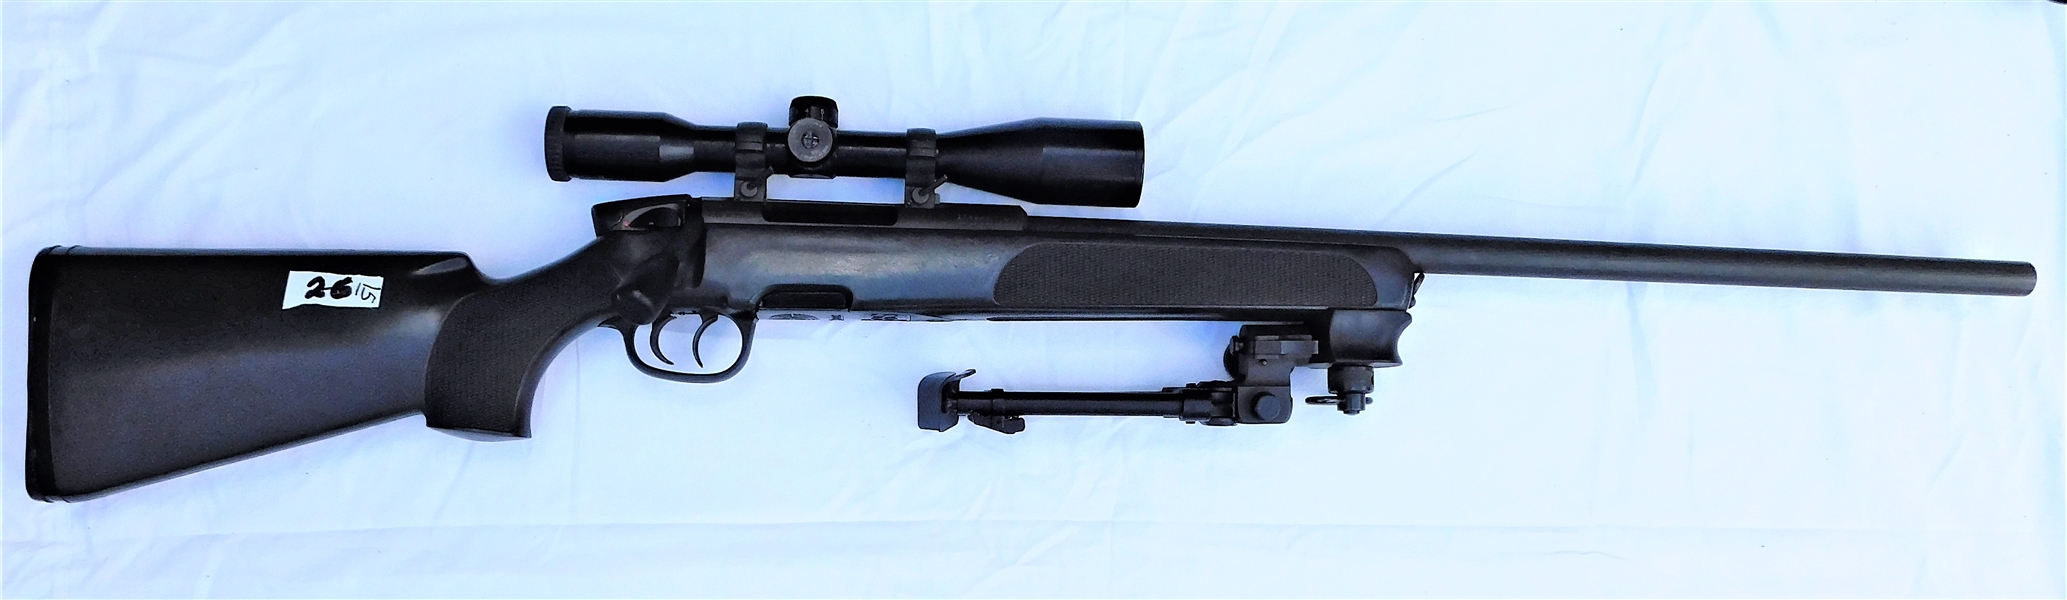 Steyr Mannlicher Bolt Action Sniper Rifle Model SSG.69 - Made in Austria - .308Win - Factory Bi-Pod, Hensoldt ZF 10x42mm Scope